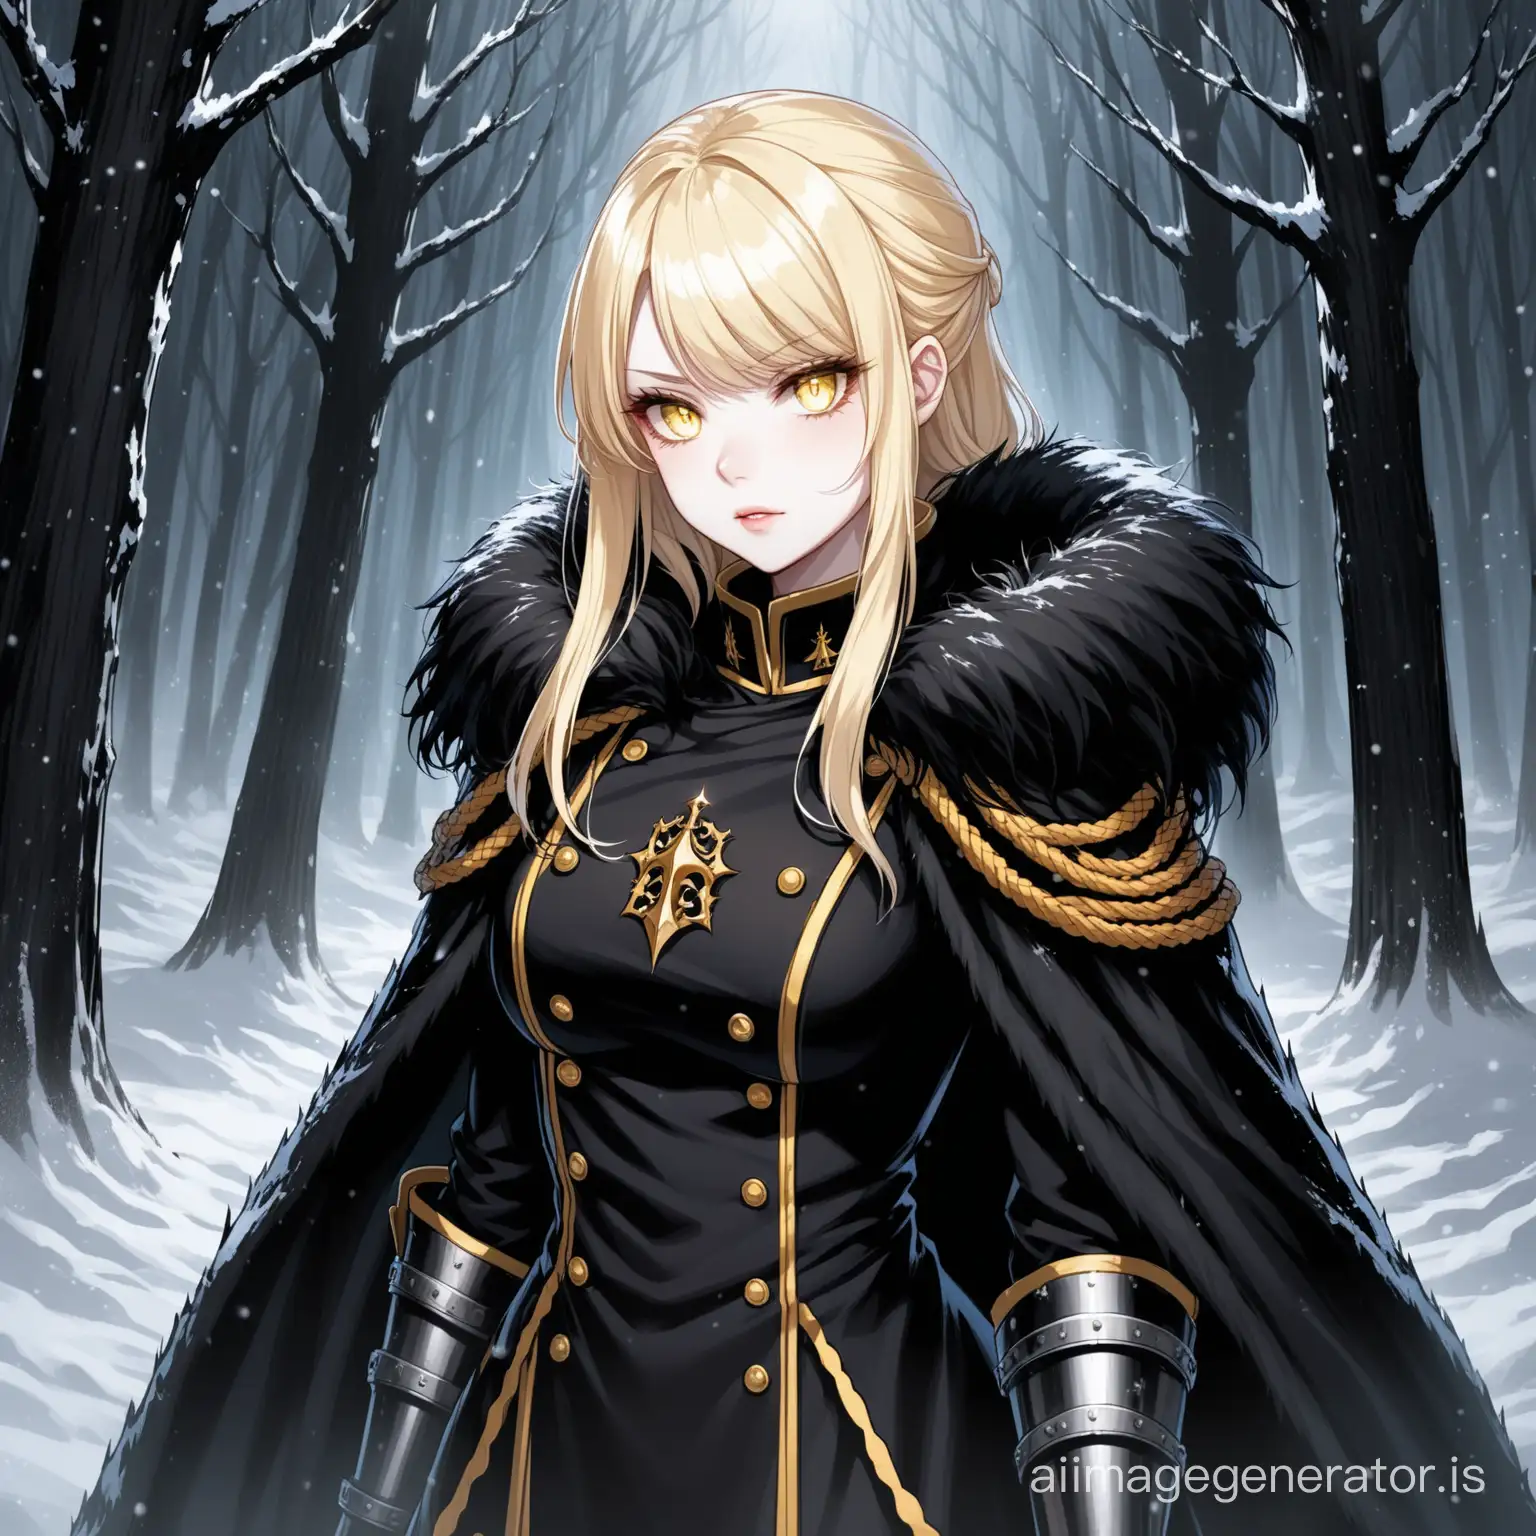 Frosty-Princess-in-Midnight-Black-Military-Uniform